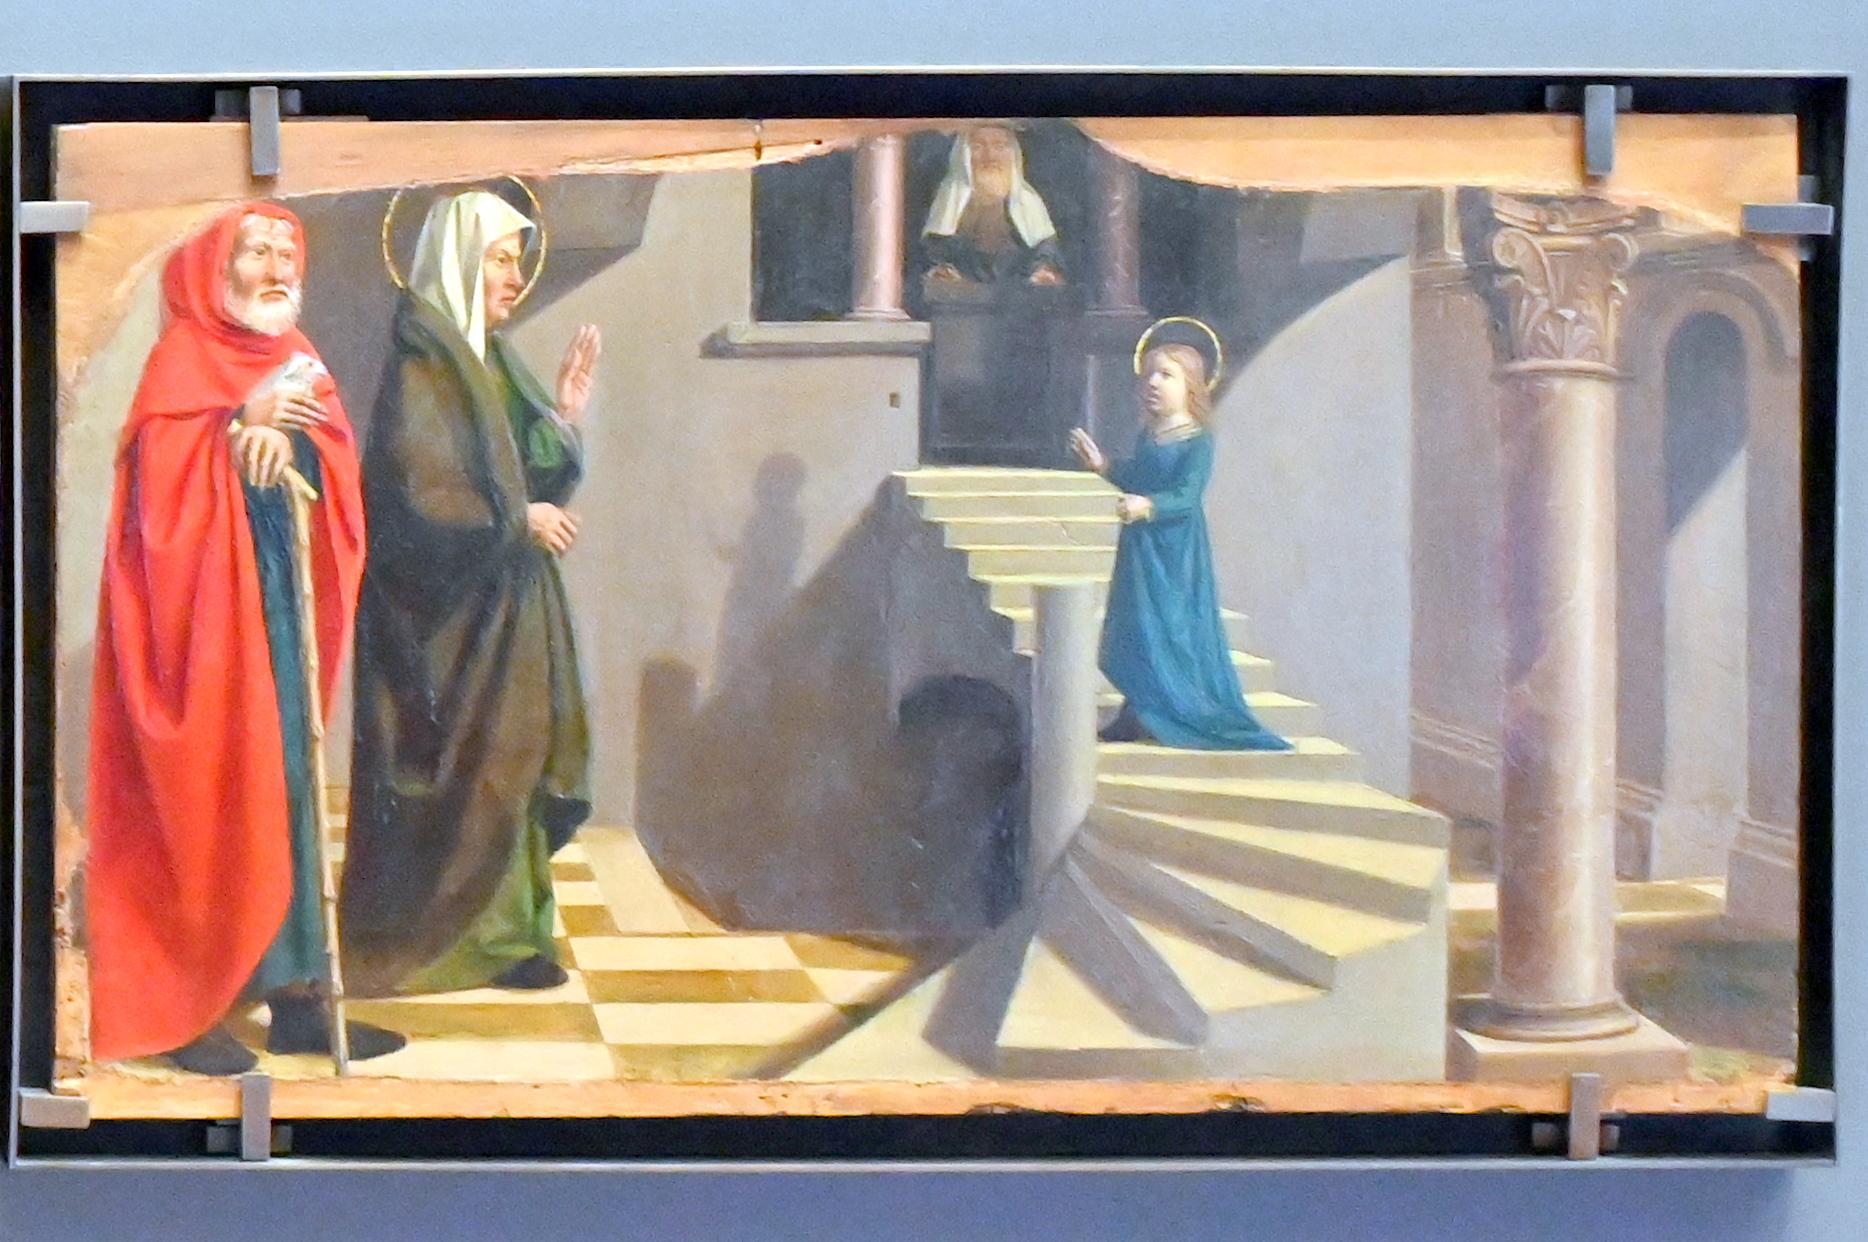 Nicolas Dipre (1500), Darstellung der Jungfrau Maria im Tempel, Paris, Musée du Louvre, Saal 832, um 1500, Bild 1/2